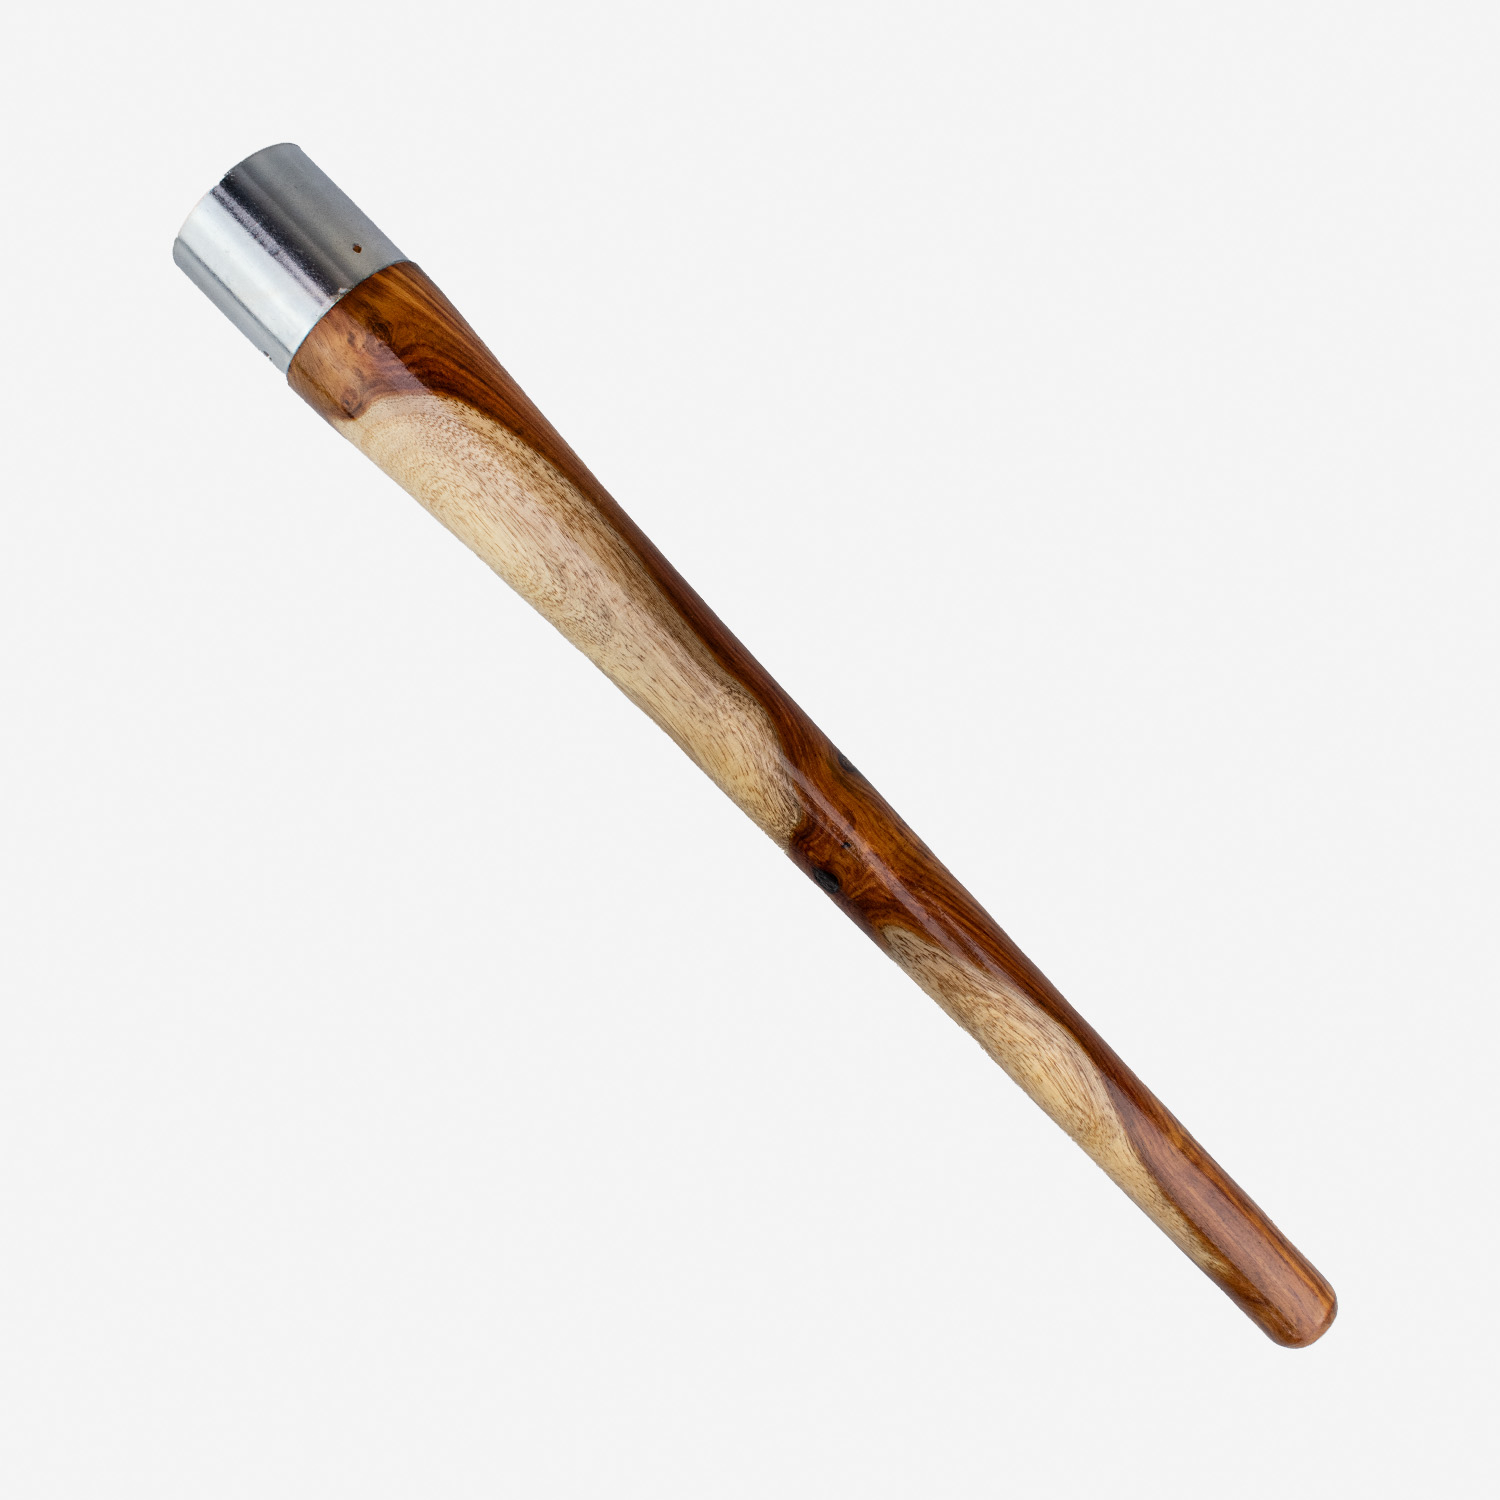 Kookaburra Gripping cone for cricket bat